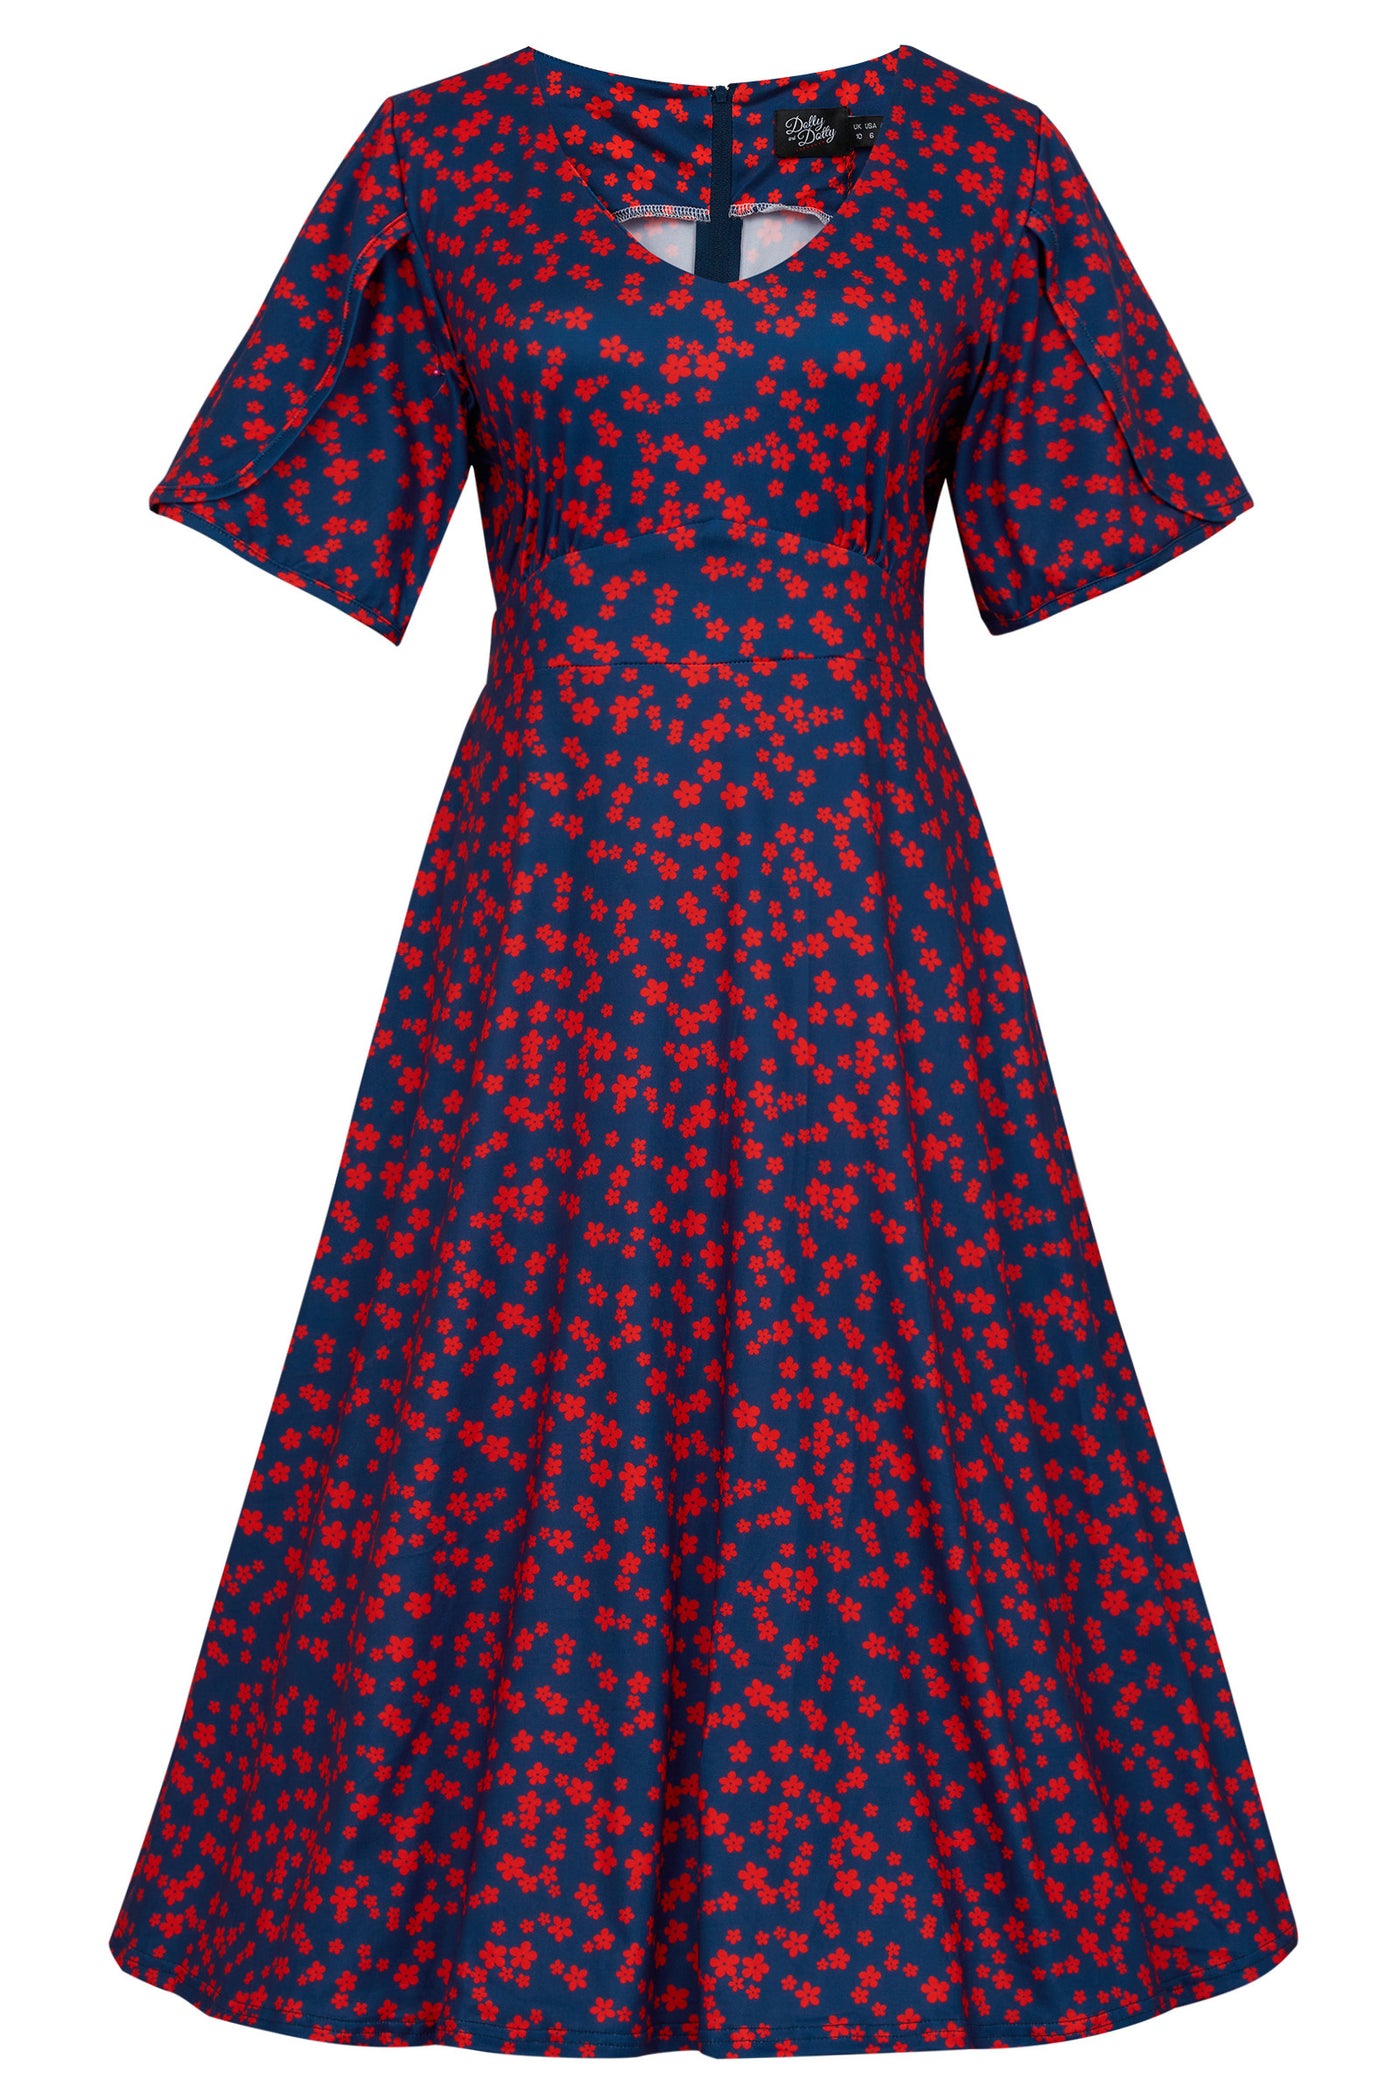 Sleeved Tea Dress in Navy Blue Ditsy Floral Print